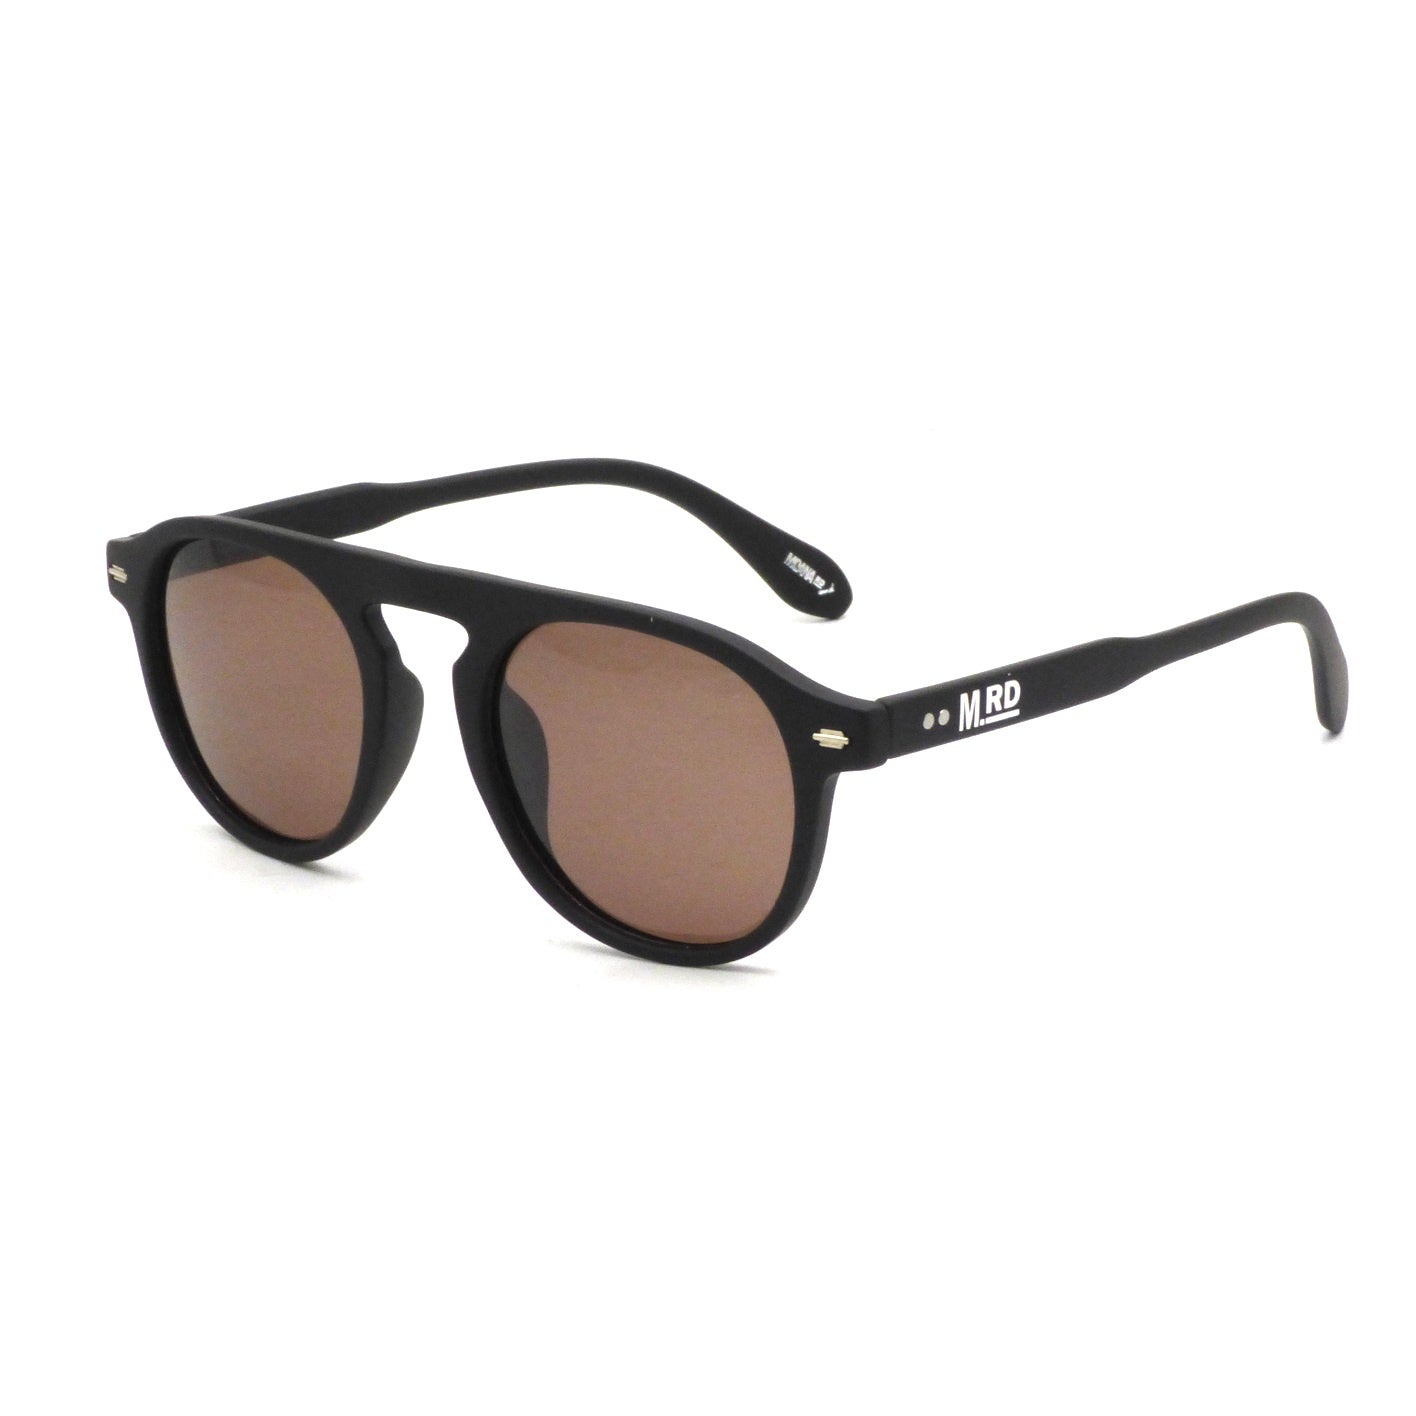 The Chandlers Sunglasses - Black | Moana Road Sunglasses | Avisons